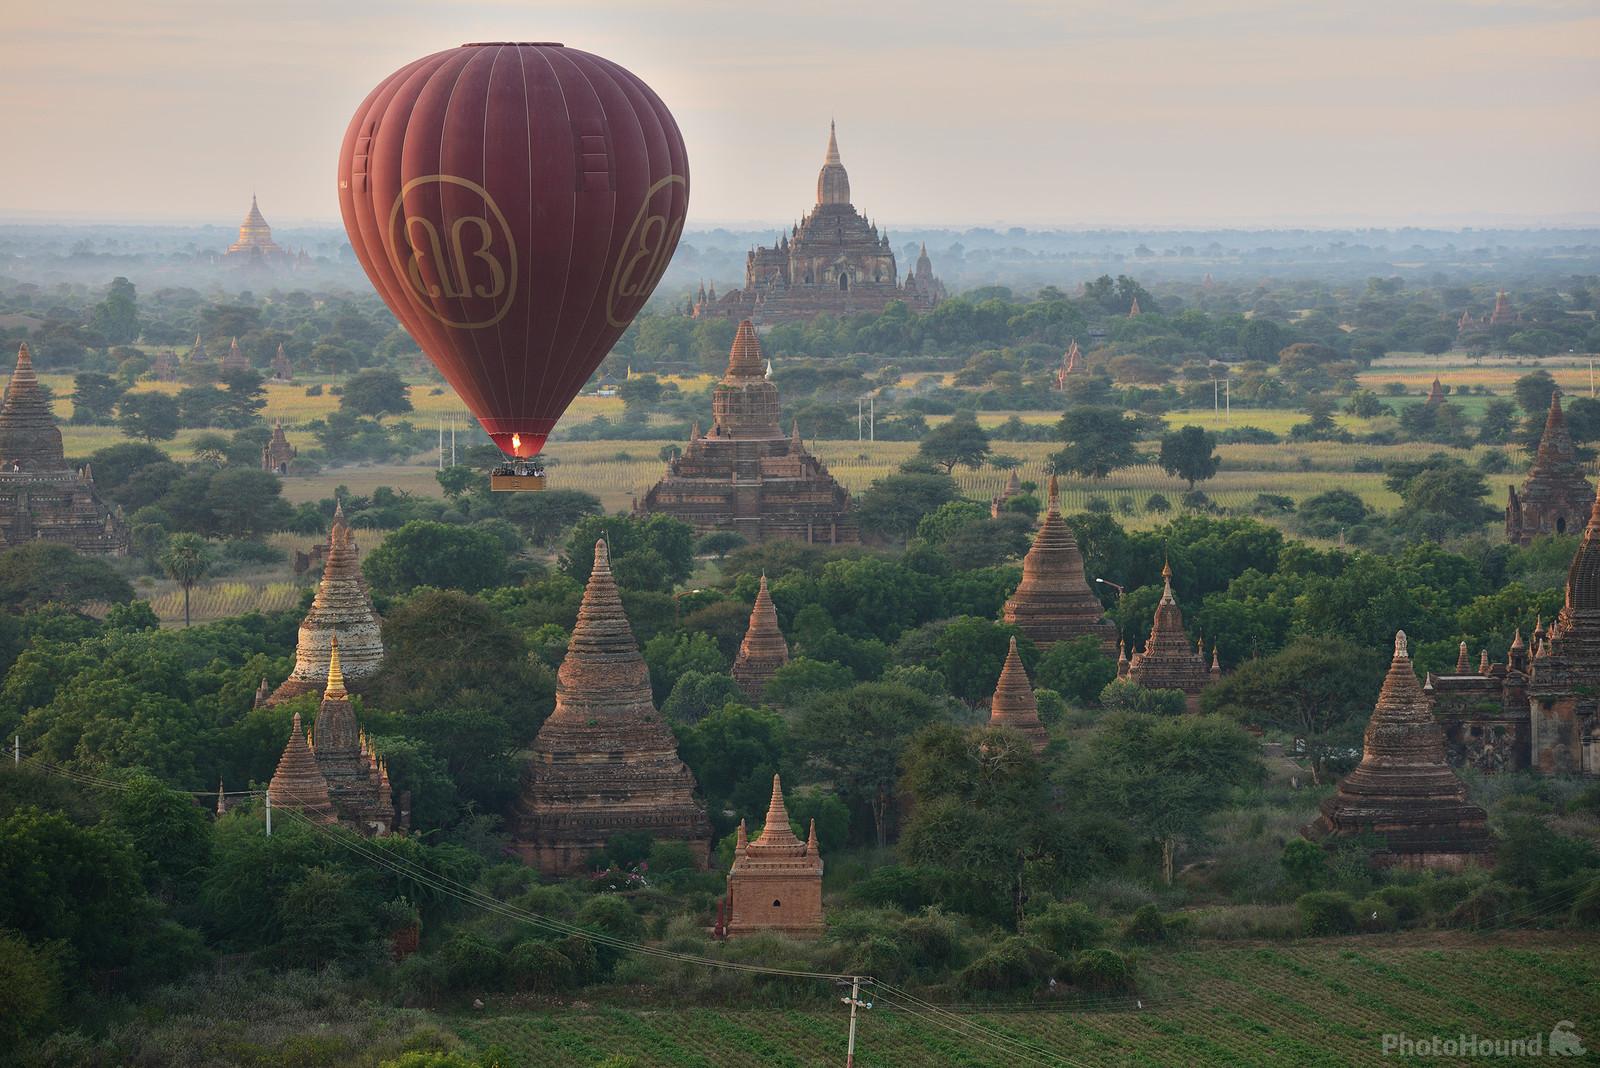 Myanmar (Burma) photo locations